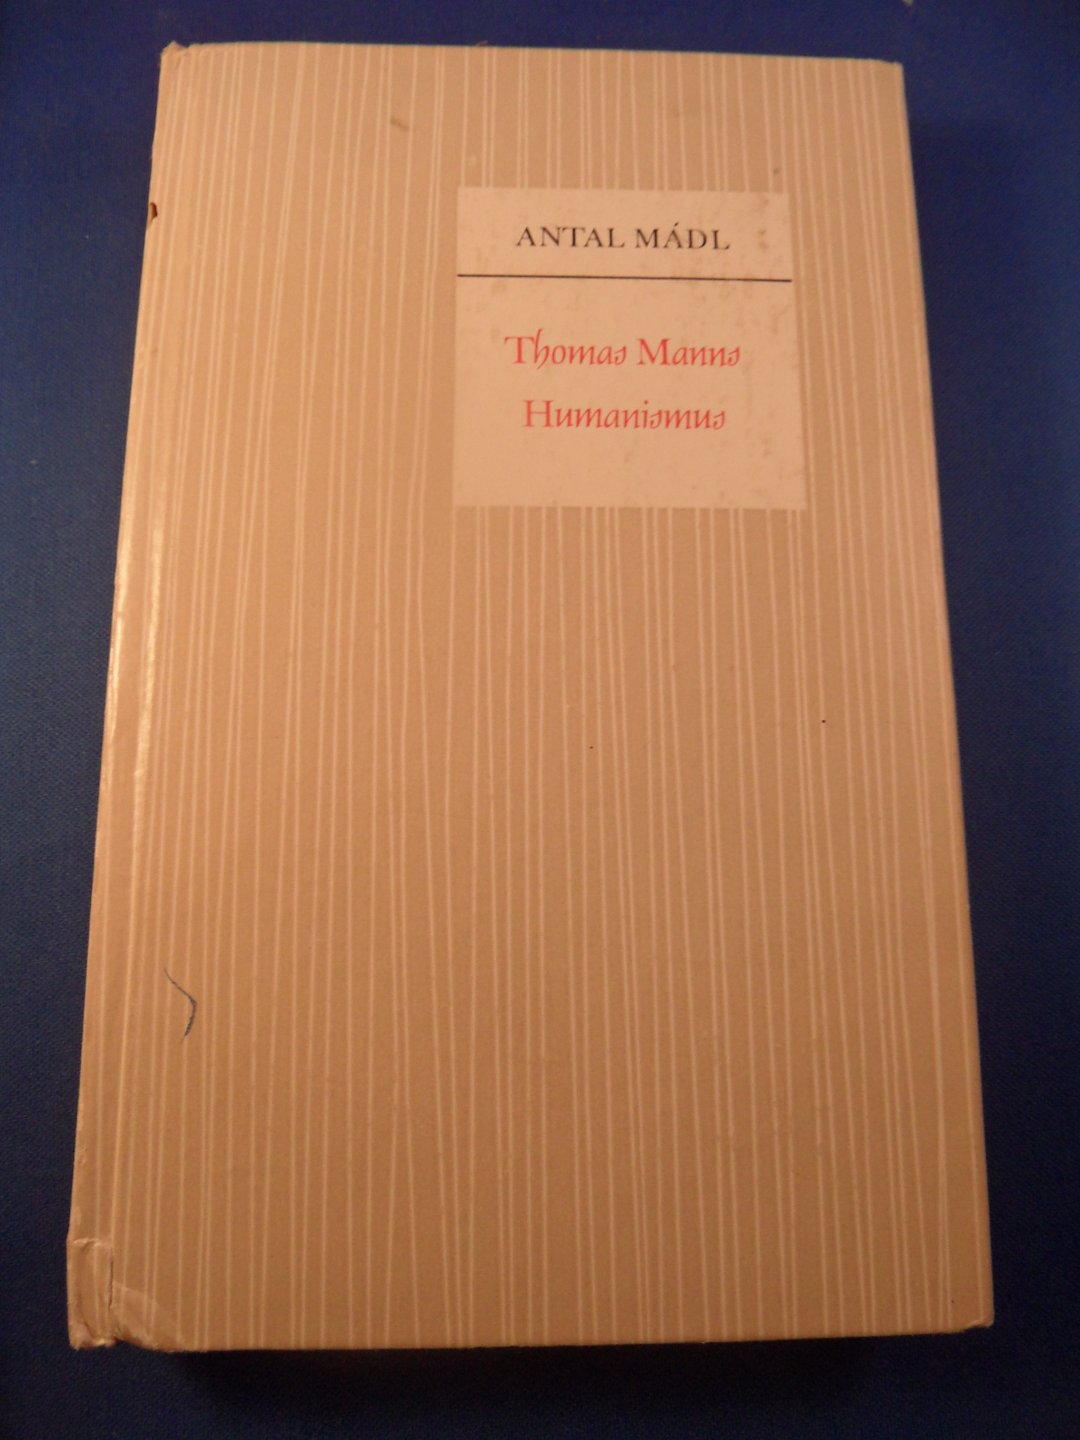 Madl, Antal - Thomas Manns Humanismus